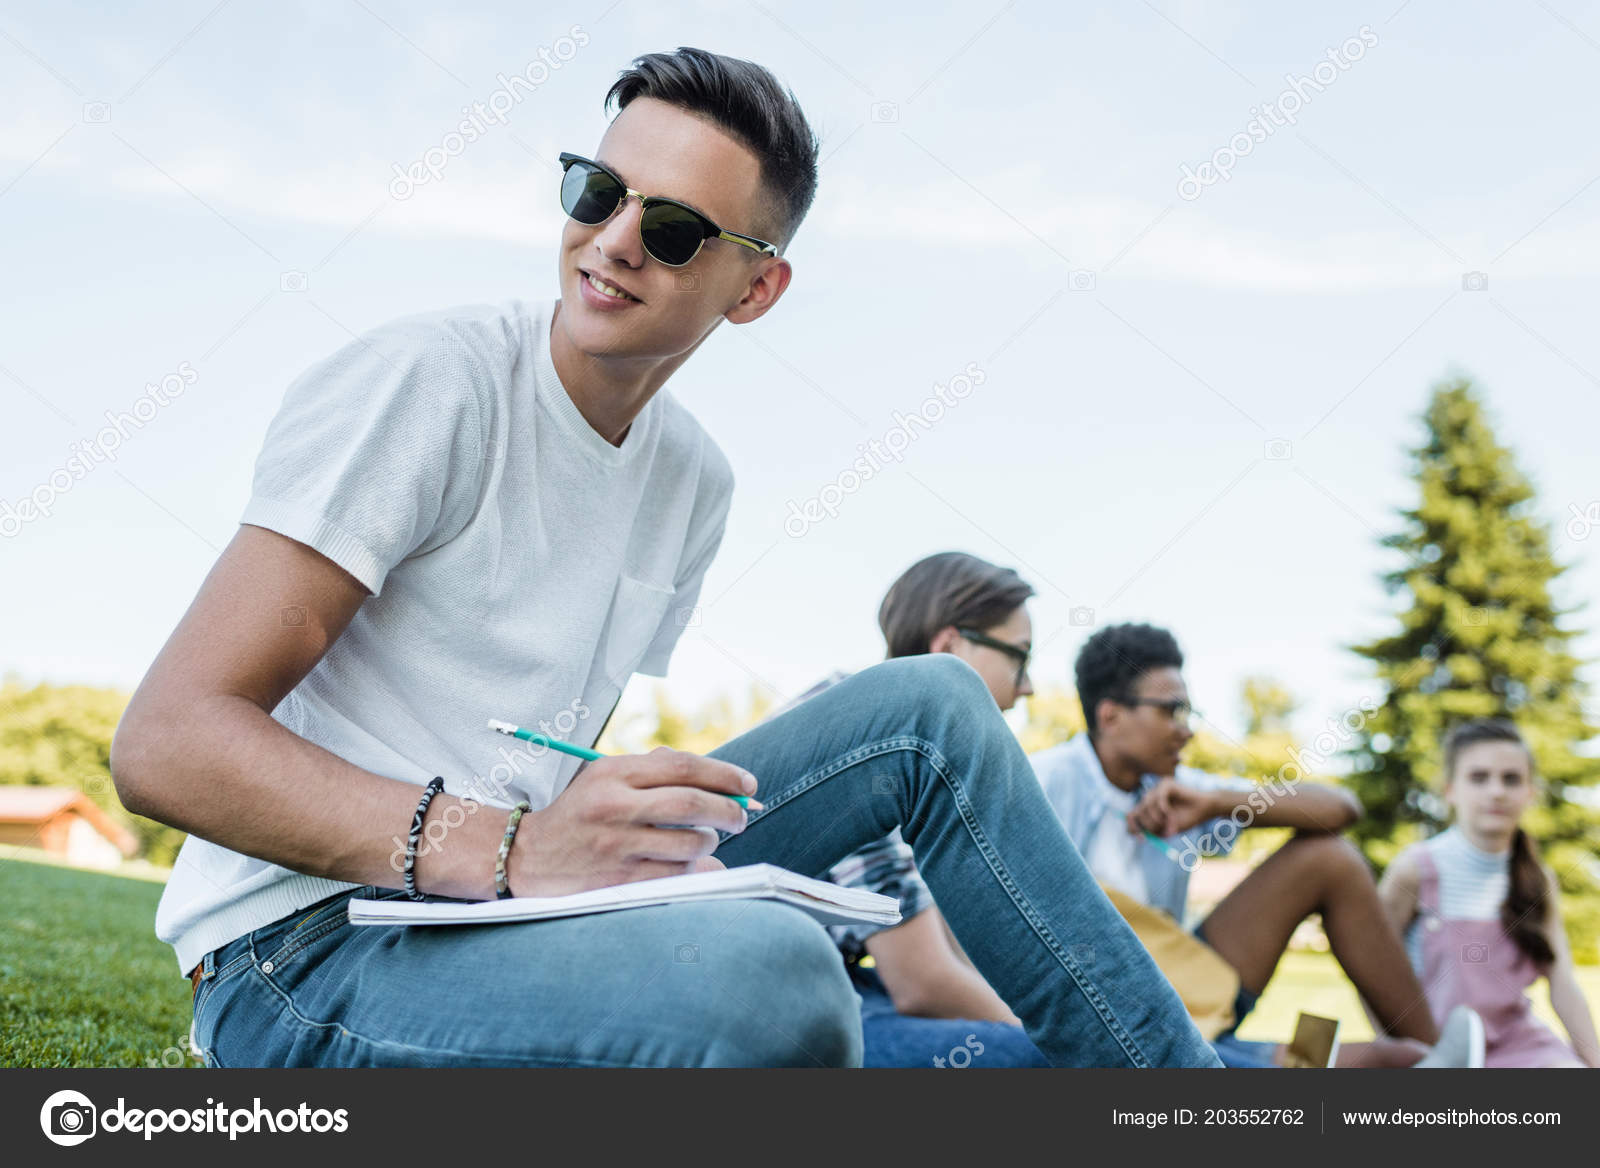 Smiling Teenage Boy Sunglasses Taking Notes Looking Away While Studying —  Stock Photo © ArturVerkhovetskiy #203552762